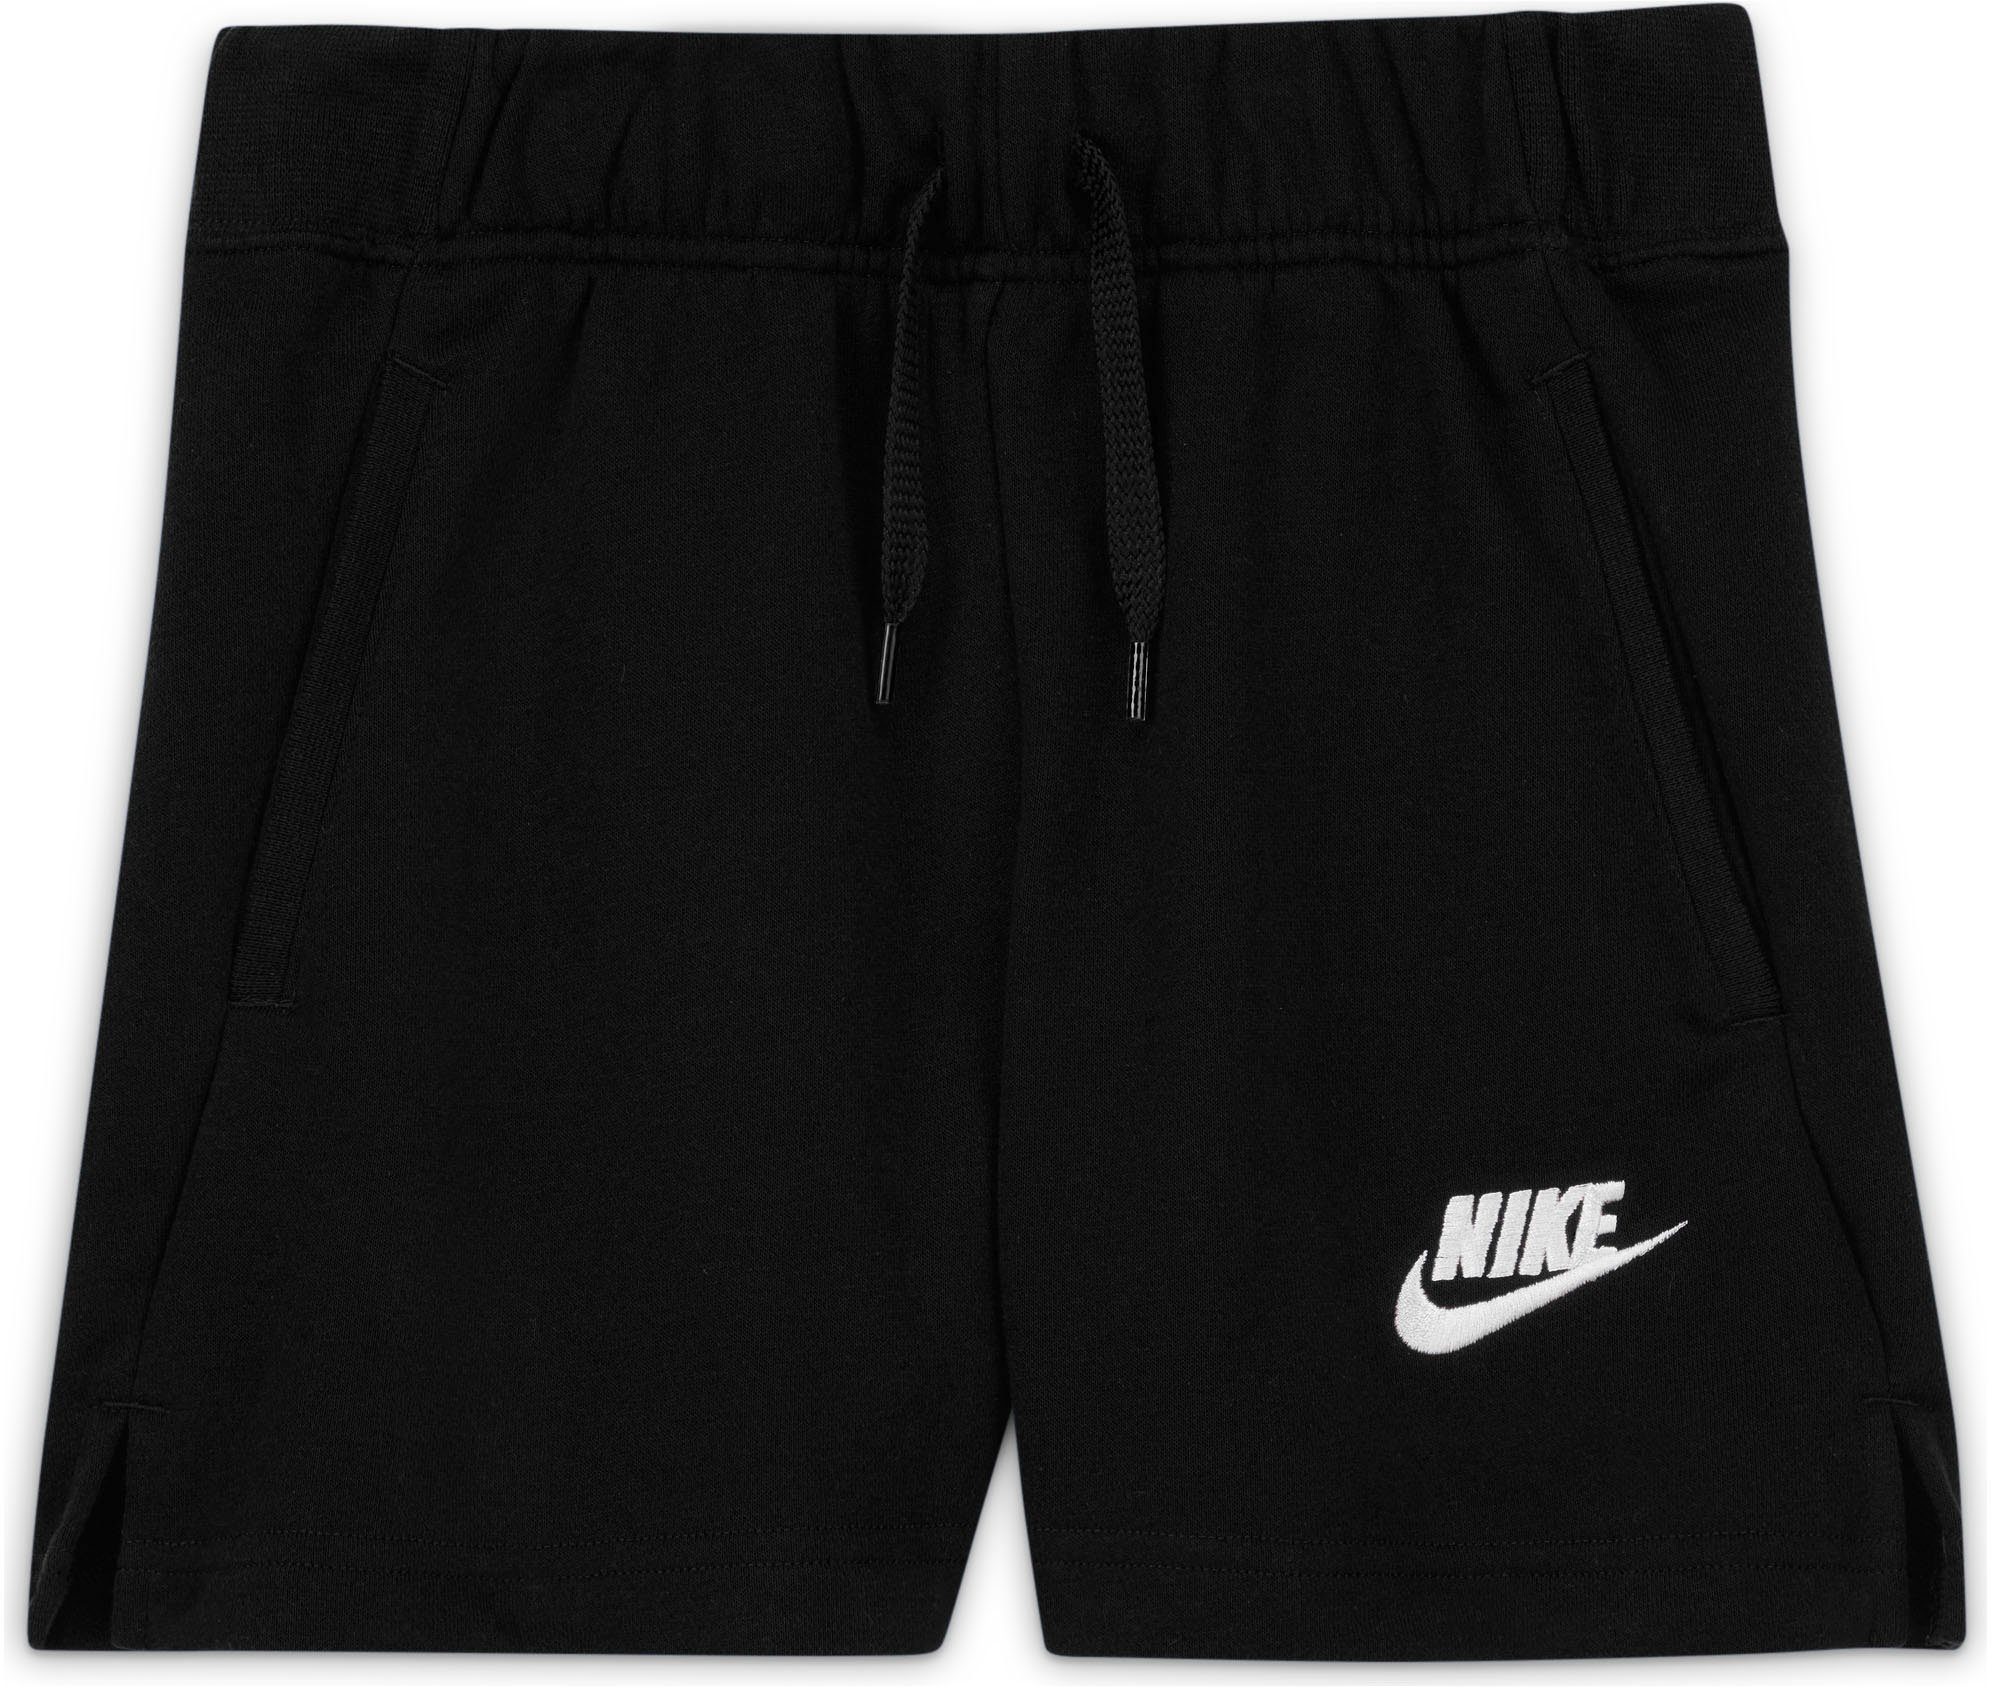 Shorts (Girls) Big Club Sportswear Terry French Nike Kids' Shorts